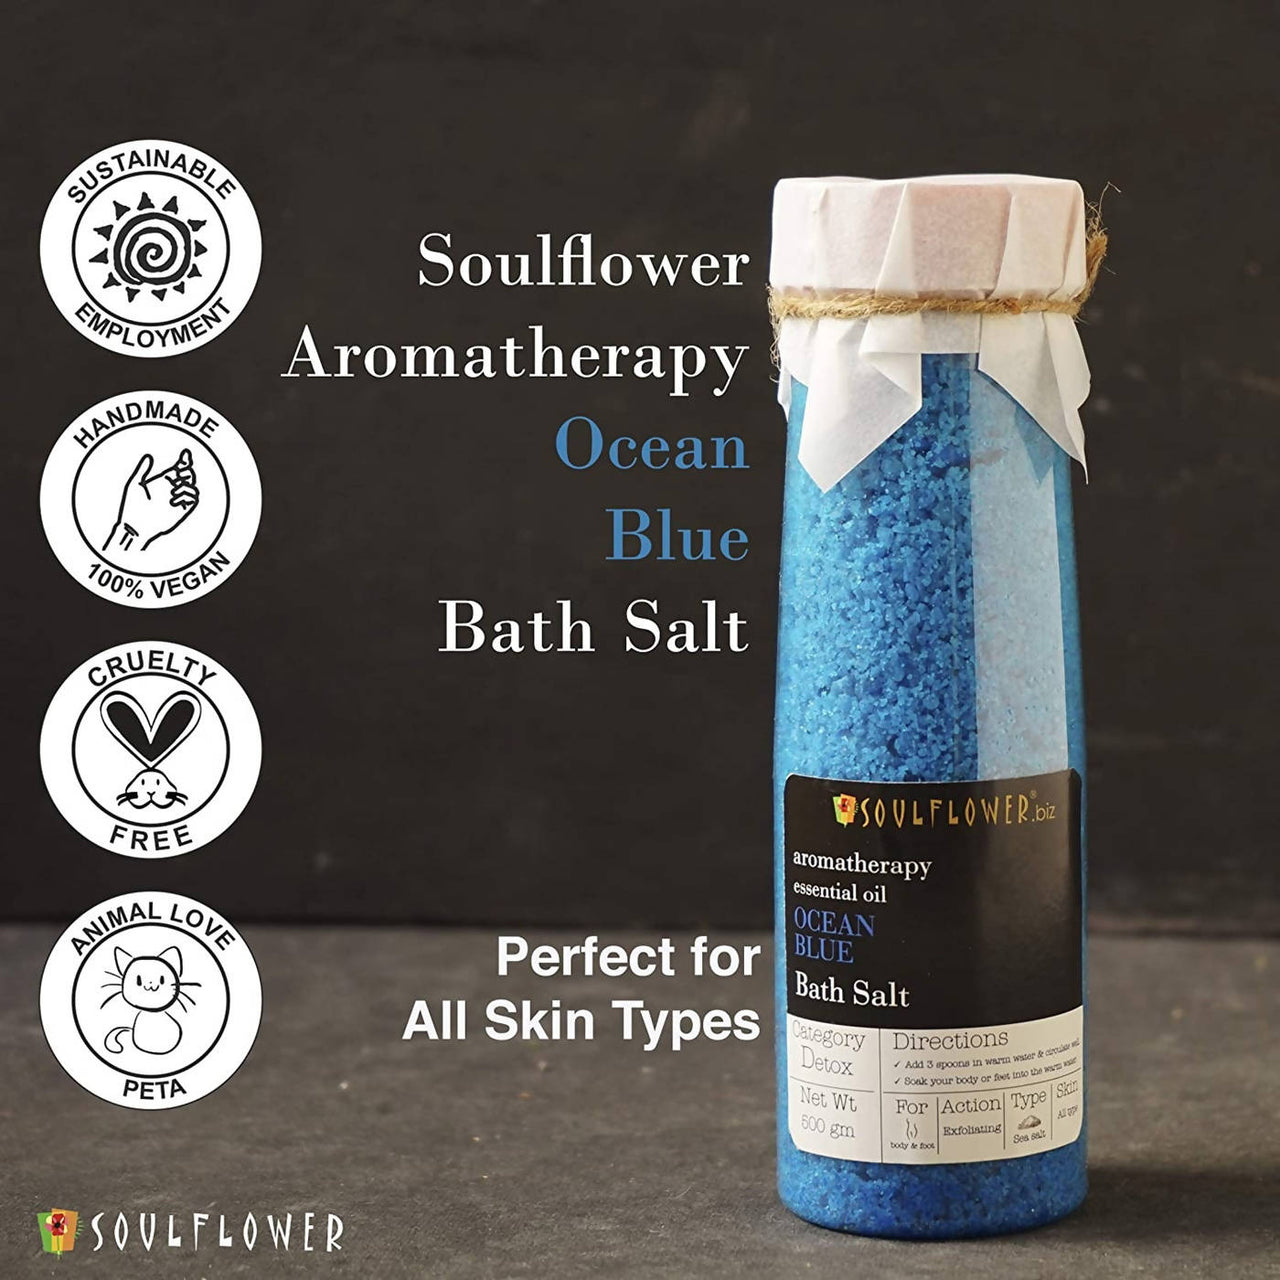 Soulflower Aromatherapy Bath Salt